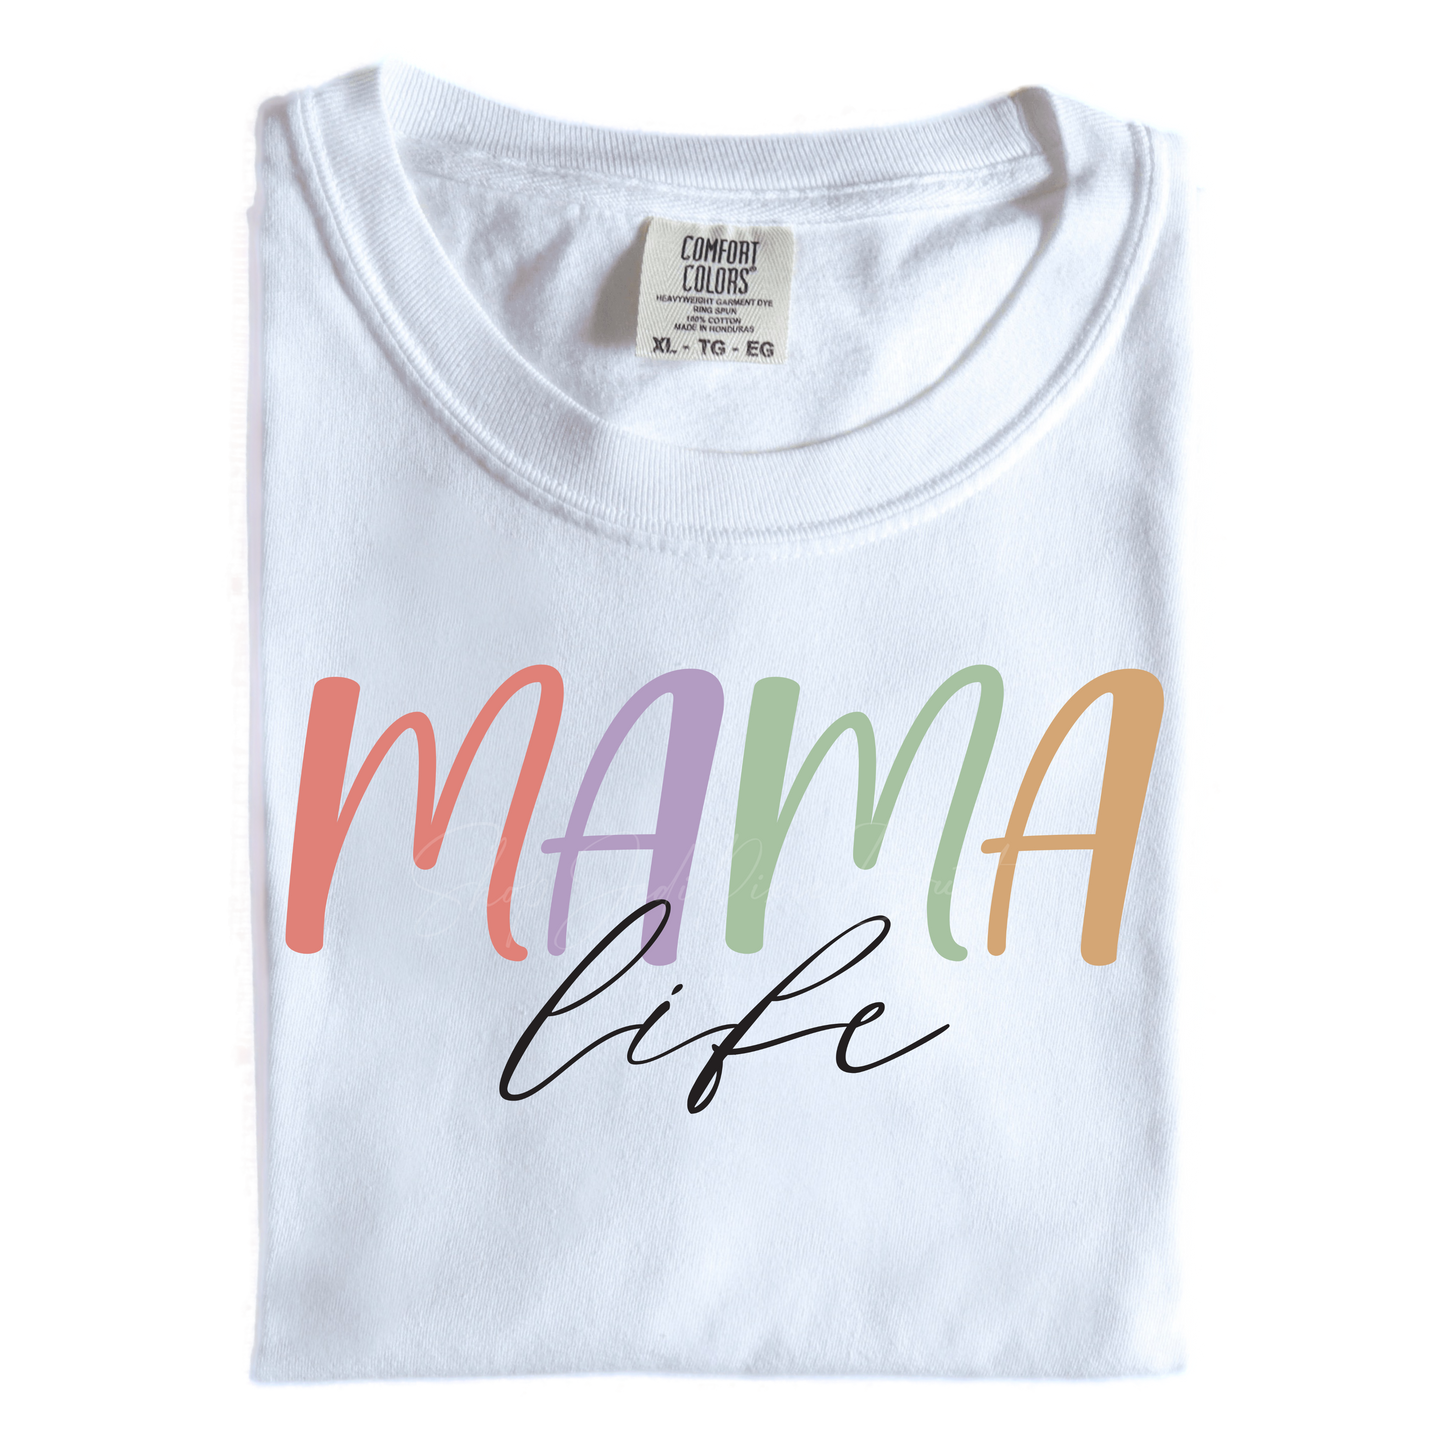 Mama Life